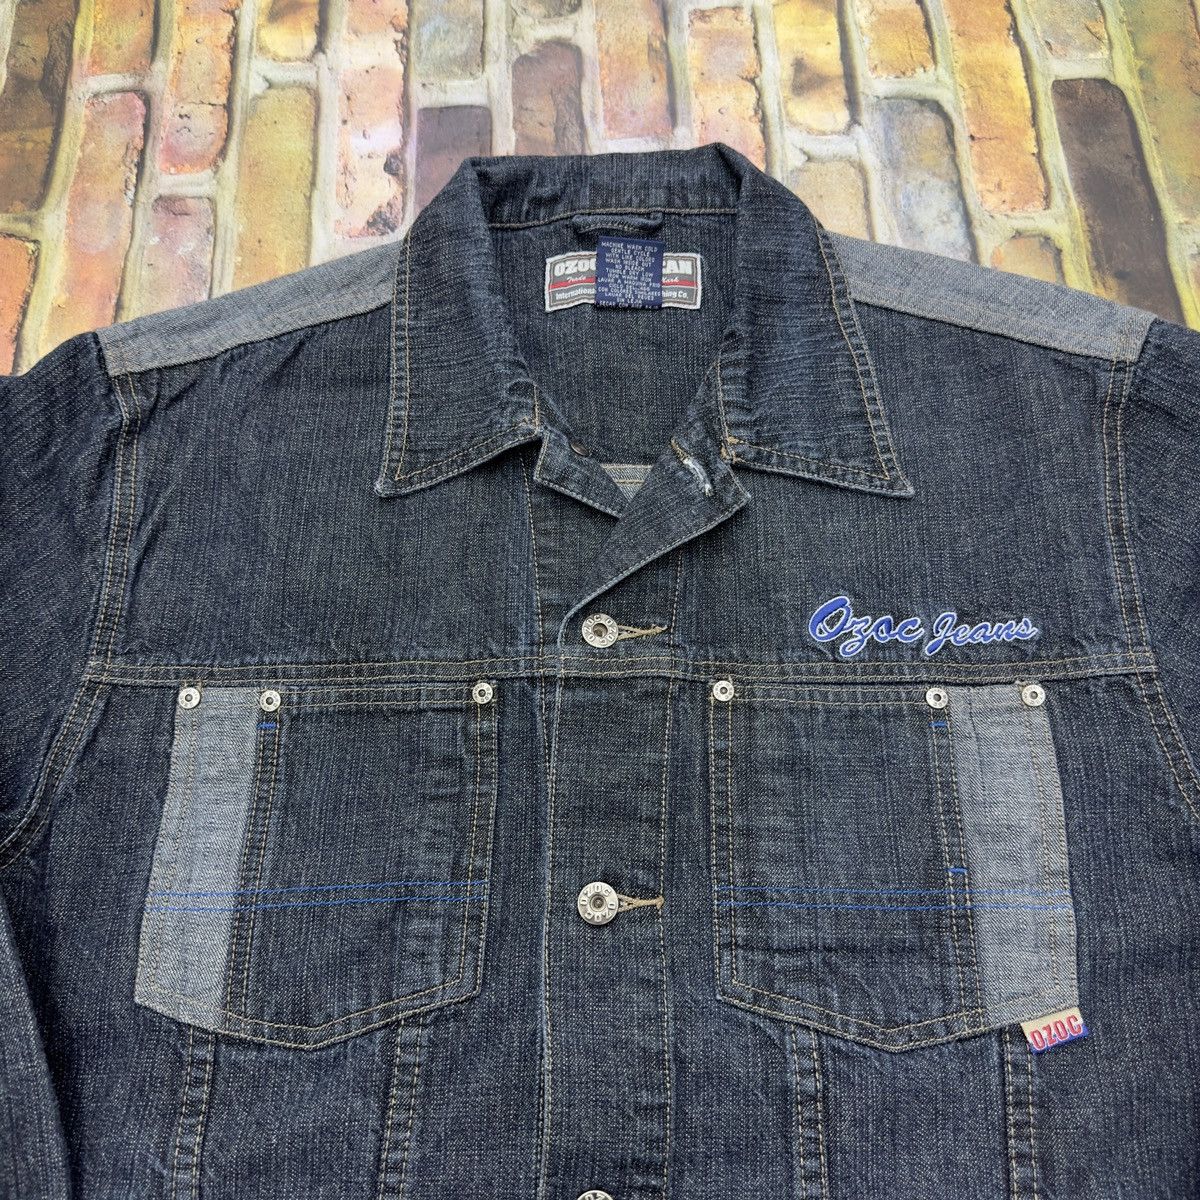 Vintage Vintage Ozoc Jeans denim jacket Size US L / EU 52-54 / 3 - 3 Thumbnail